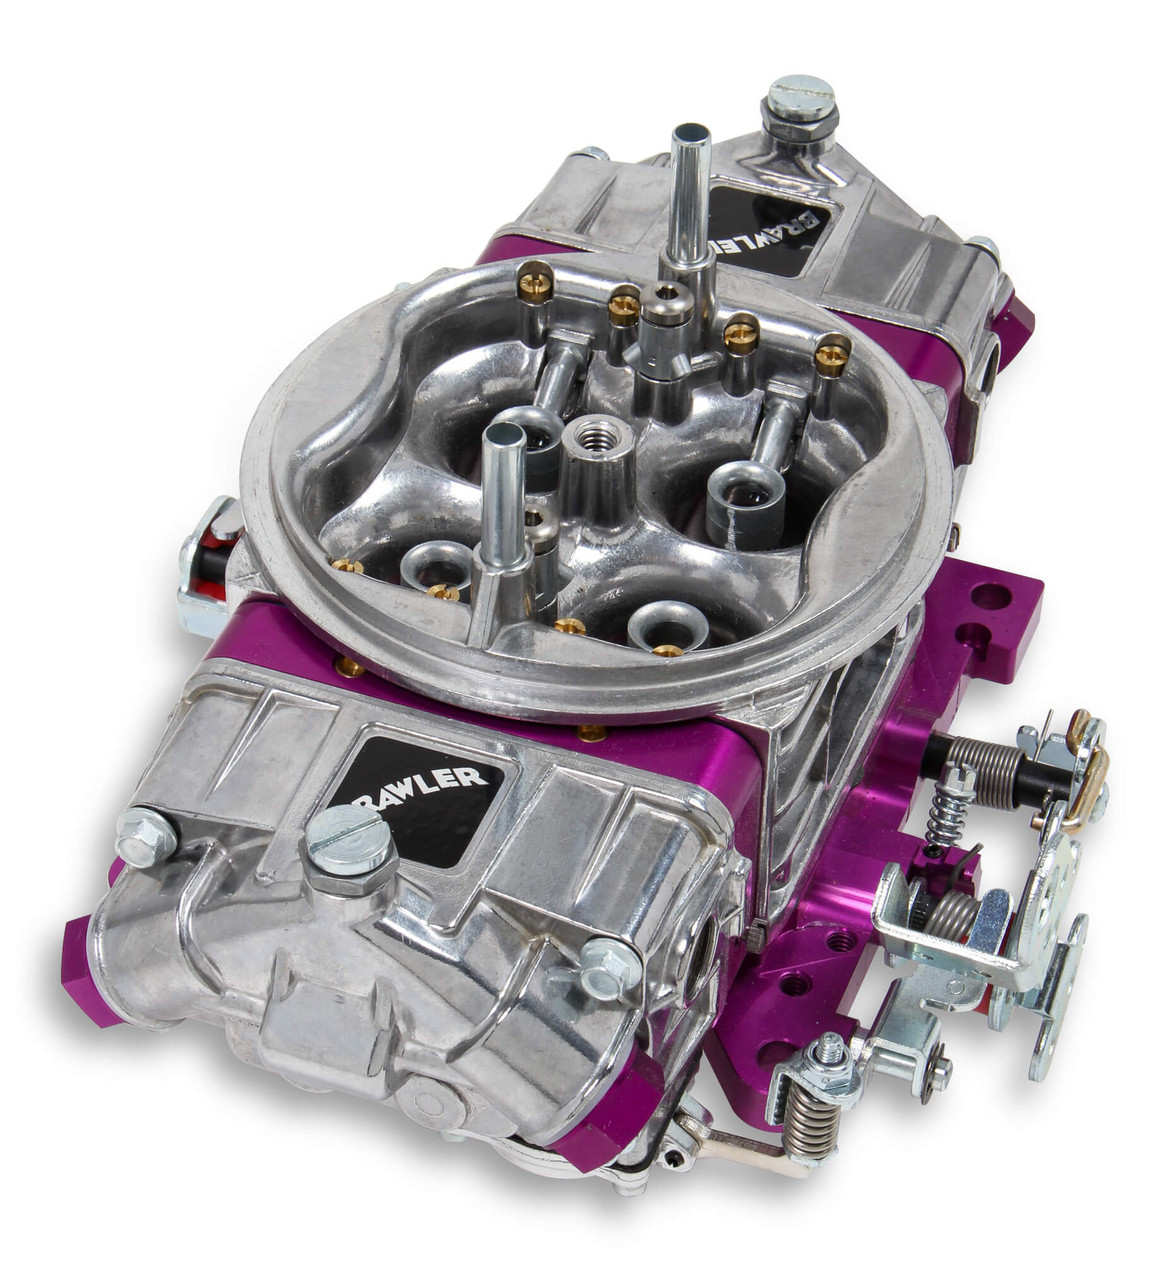 BR-67202 Brawler 950 CFM Brawler Race Carburetor Mechanical Secondary